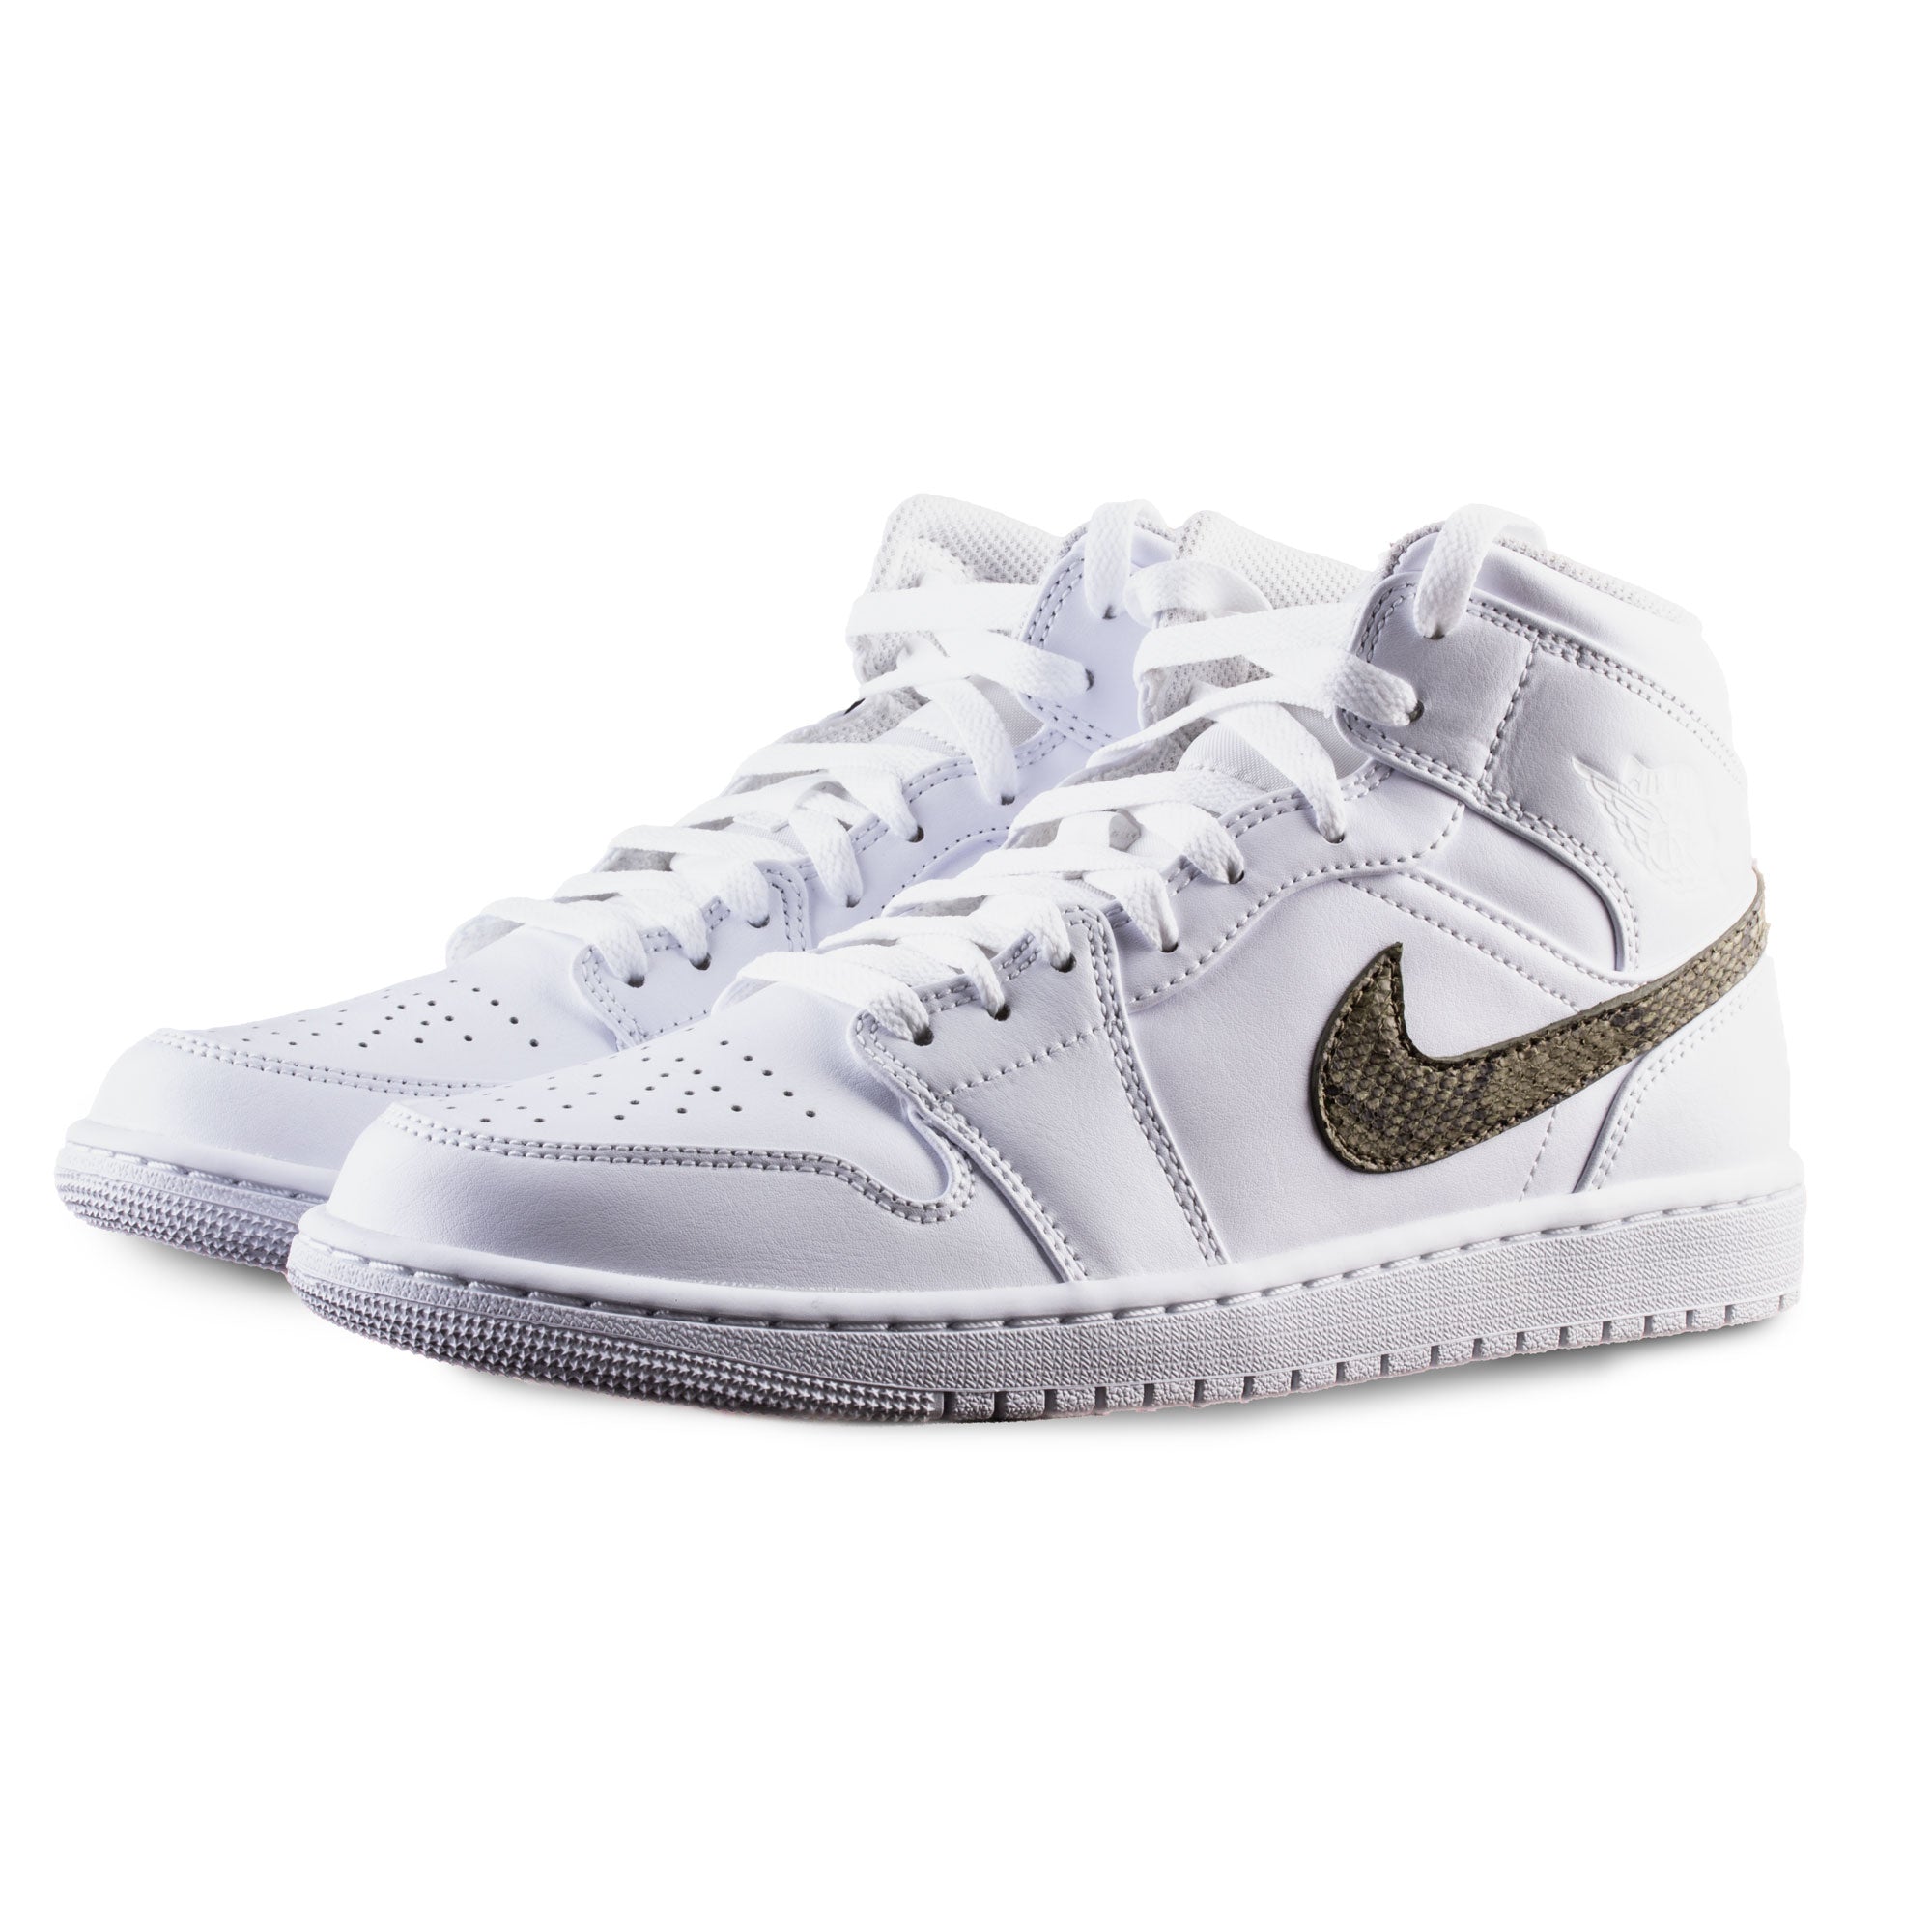 Nike Air Jordan 1 Sneakers - Custom leather Swoosh - Python